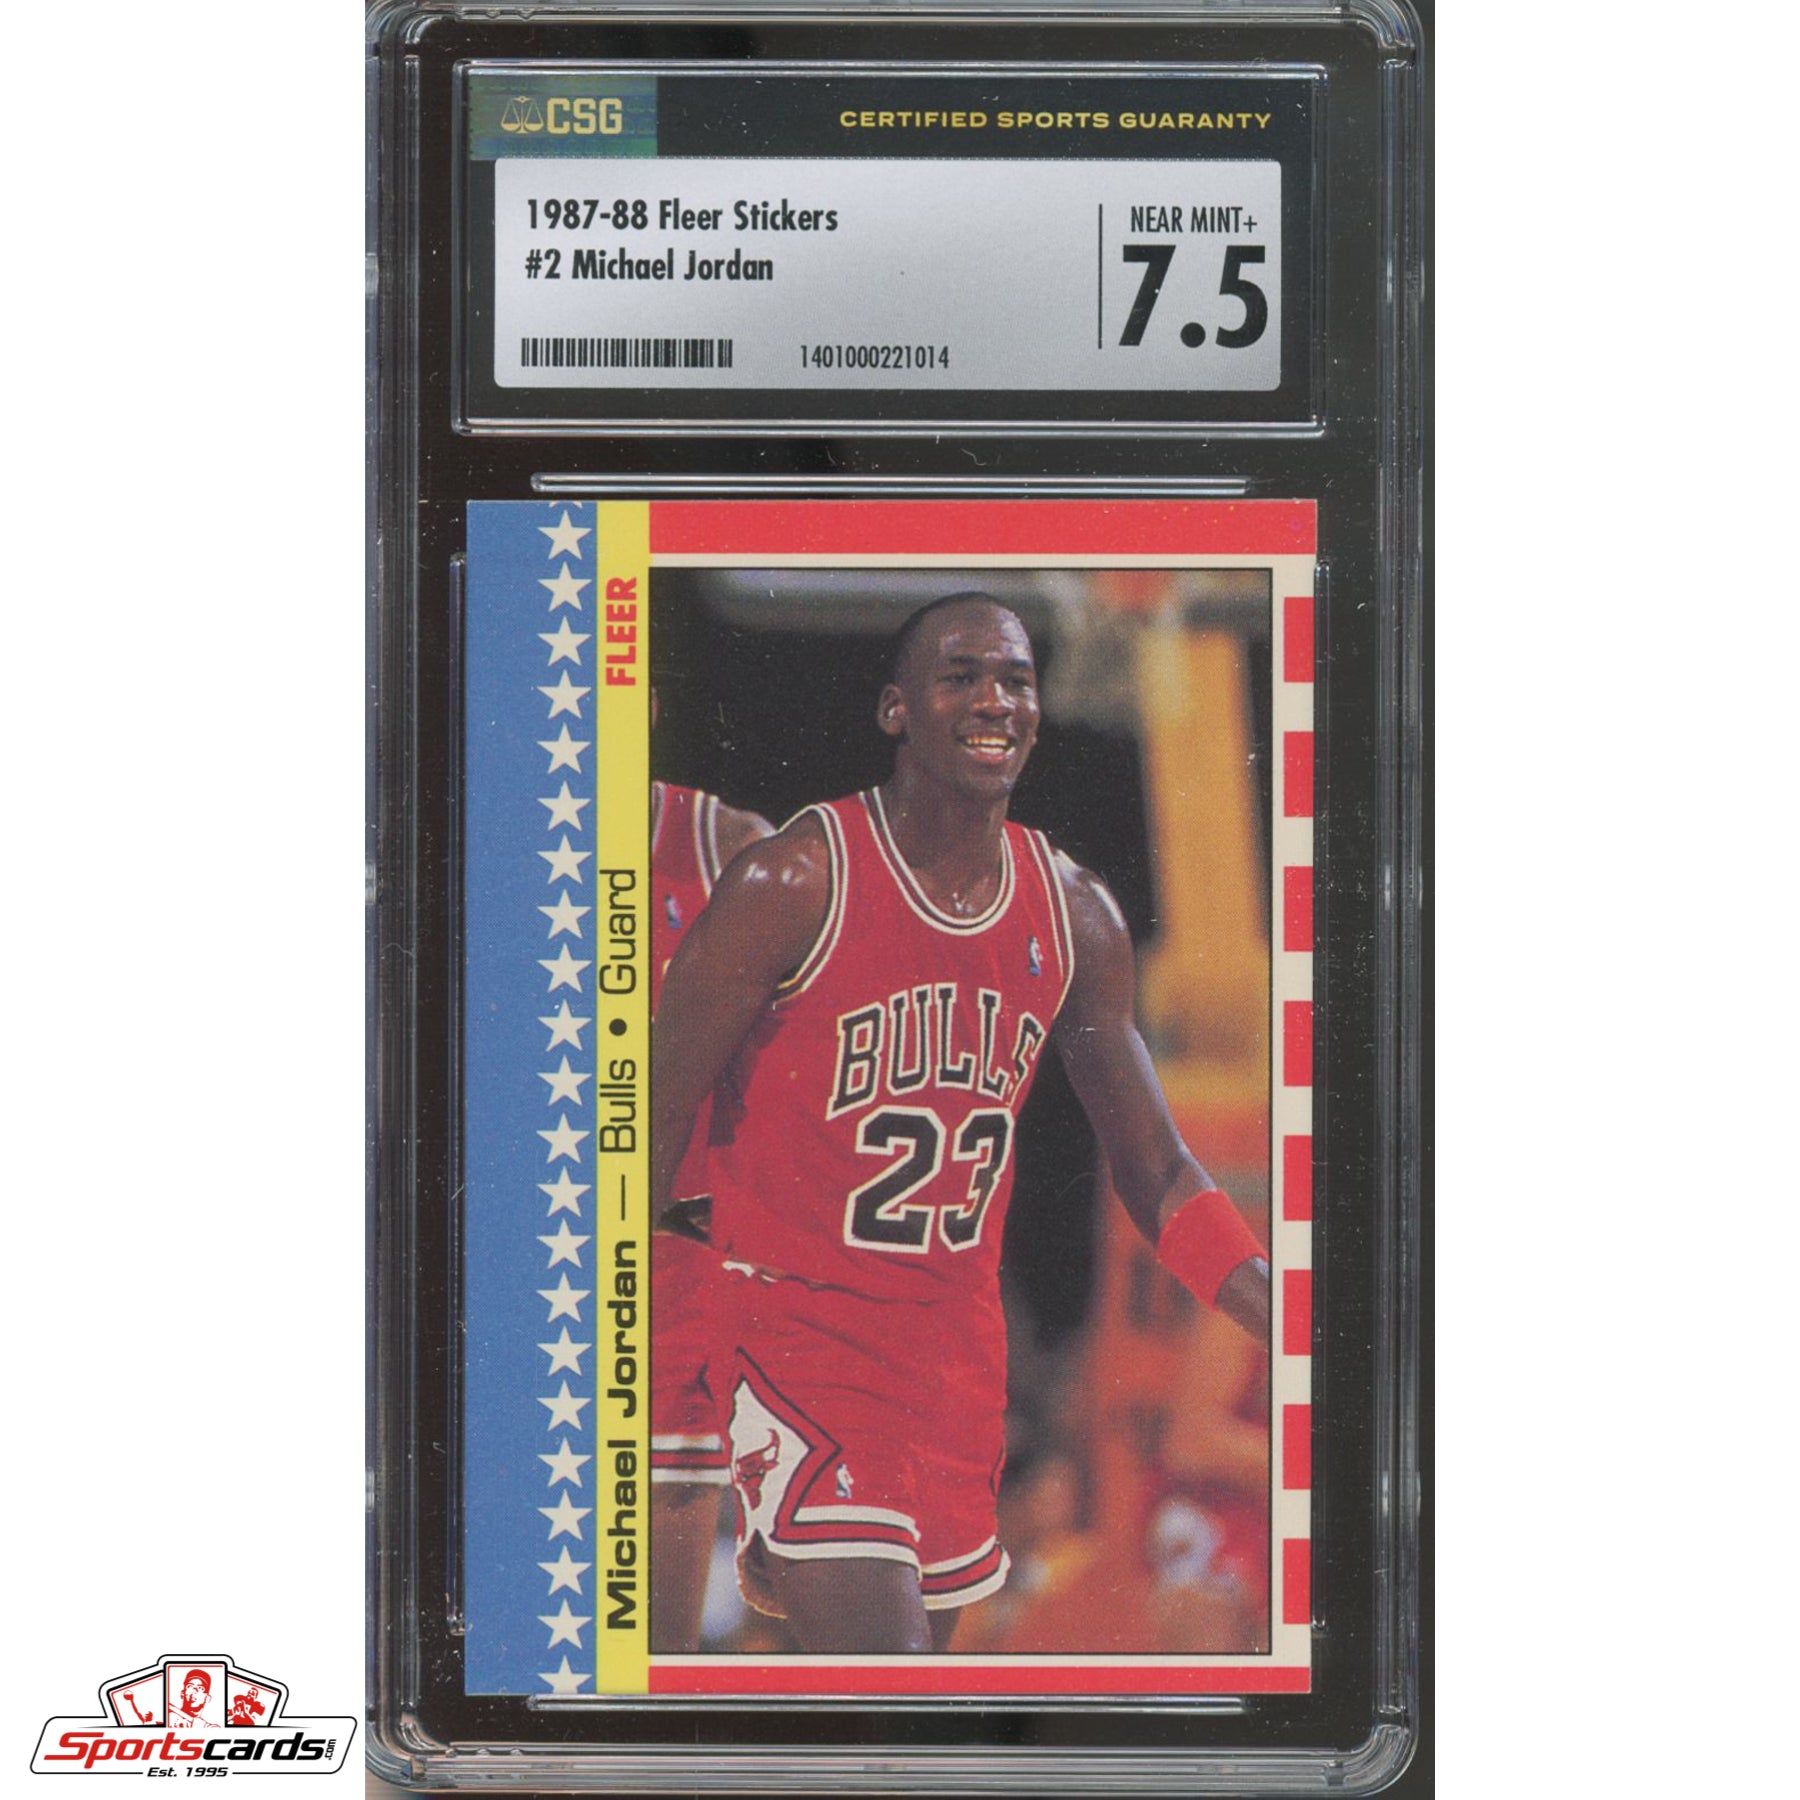 1987-88 Fleer Sticker Michael Jordan #2 CSG 7.5 Bulls HOF